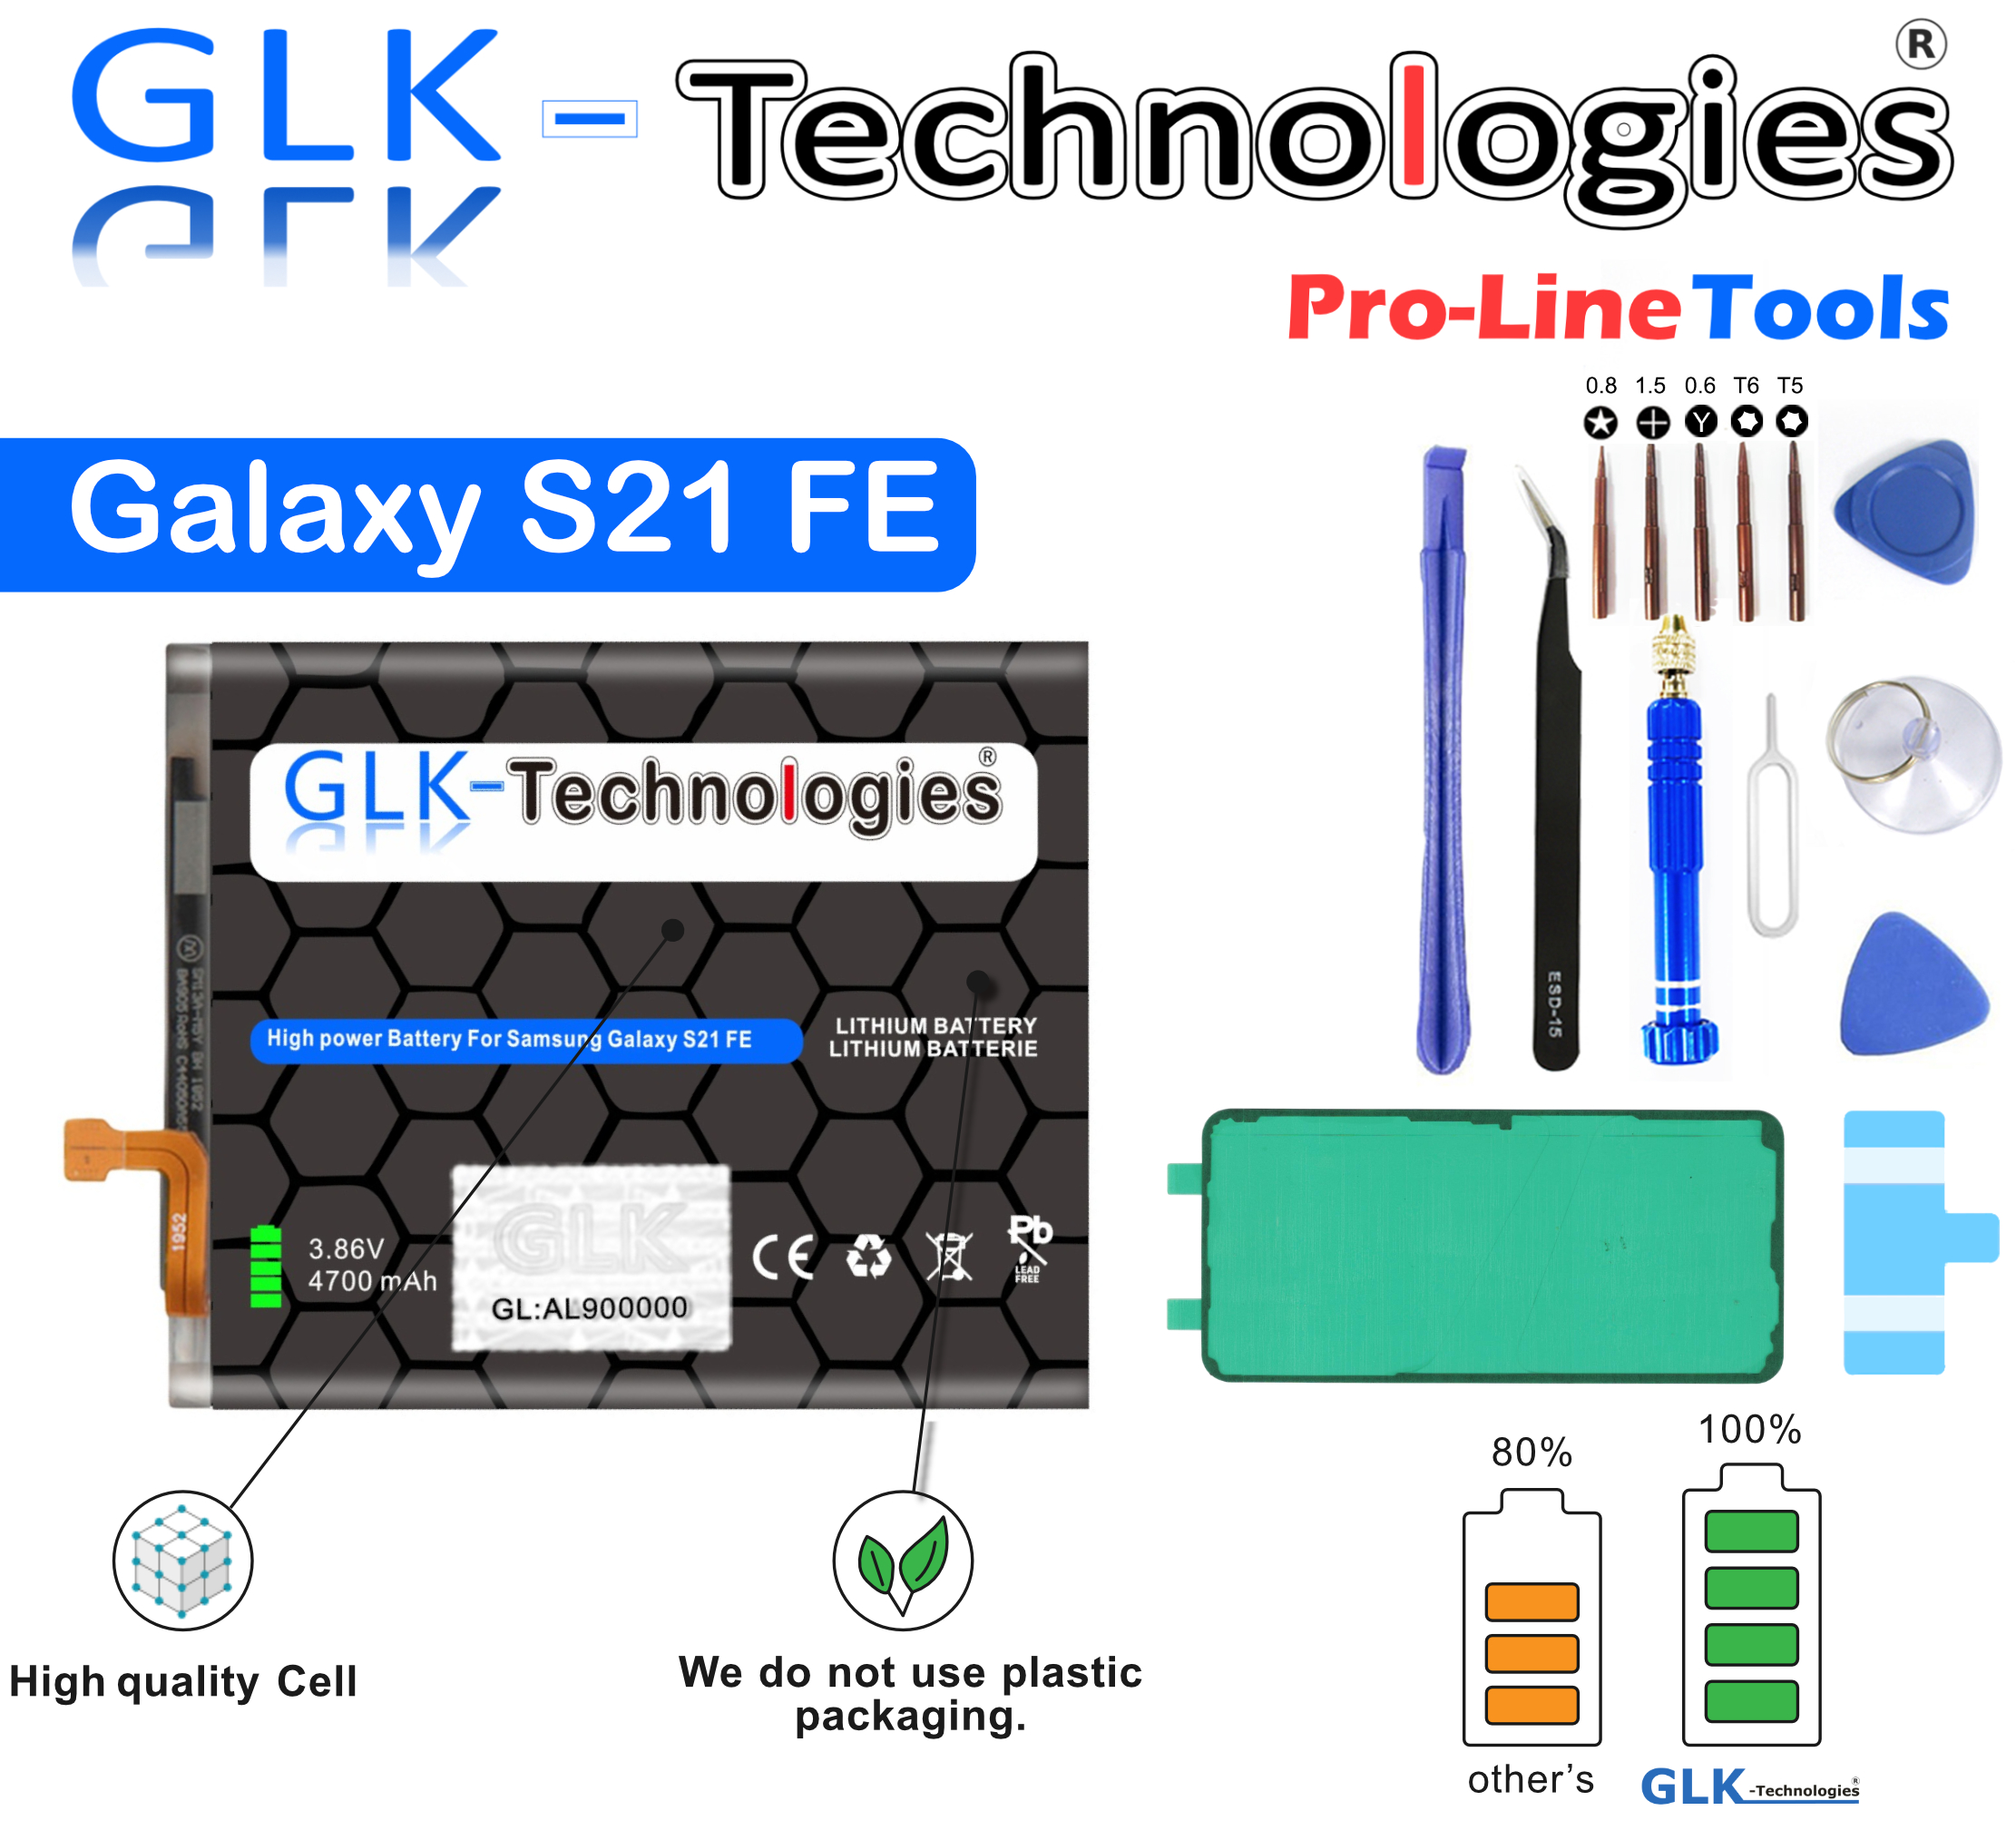 Werkzeug 4700mAh Akku, GLK-TECHNOLOGIES Set FE SM-G990 S21 PROFI Smartphone 5G 4700mAh inkl. EB-BG990ABY Samsung Lithium-Ionen-Akku Galaxy